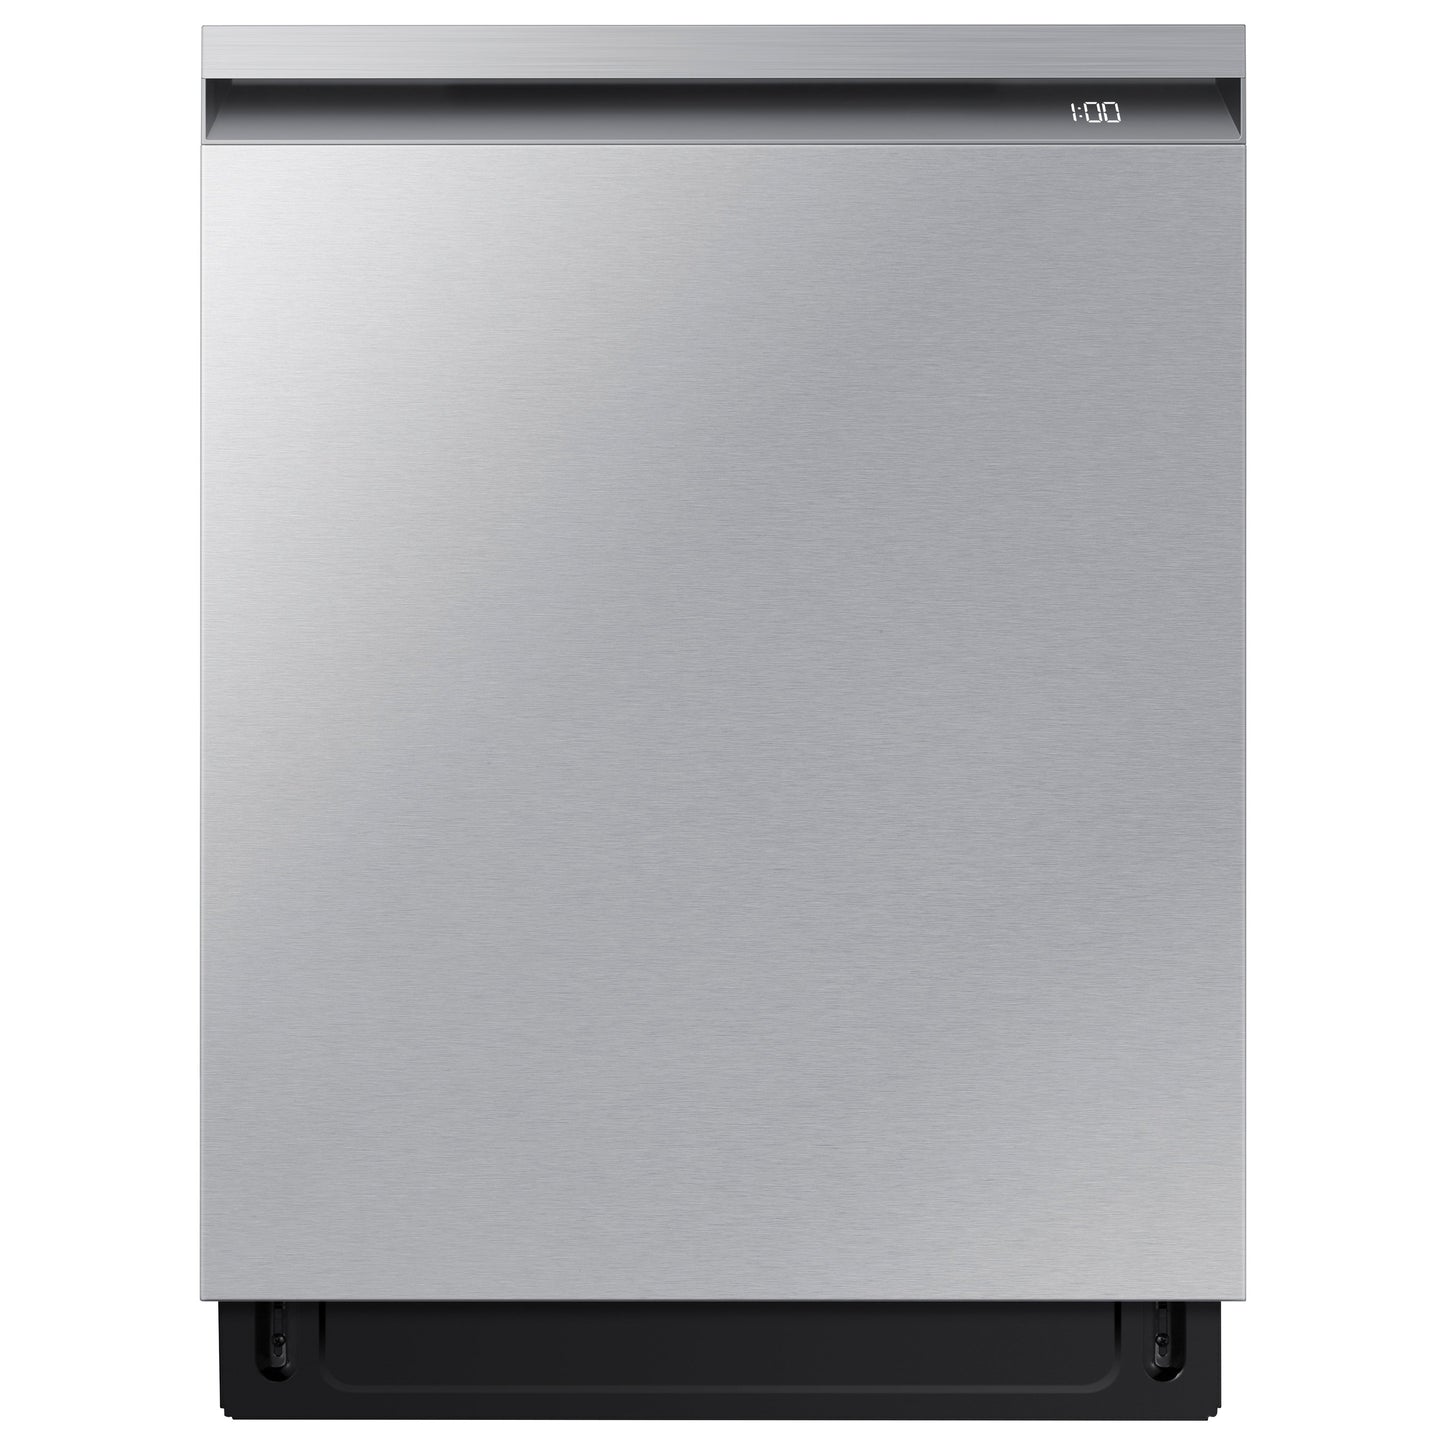 OPEN BOX Samsung Bespoke Family Hub+ 4-Door French Door Refrigerator and Kitchen Suite in Stainless Steel